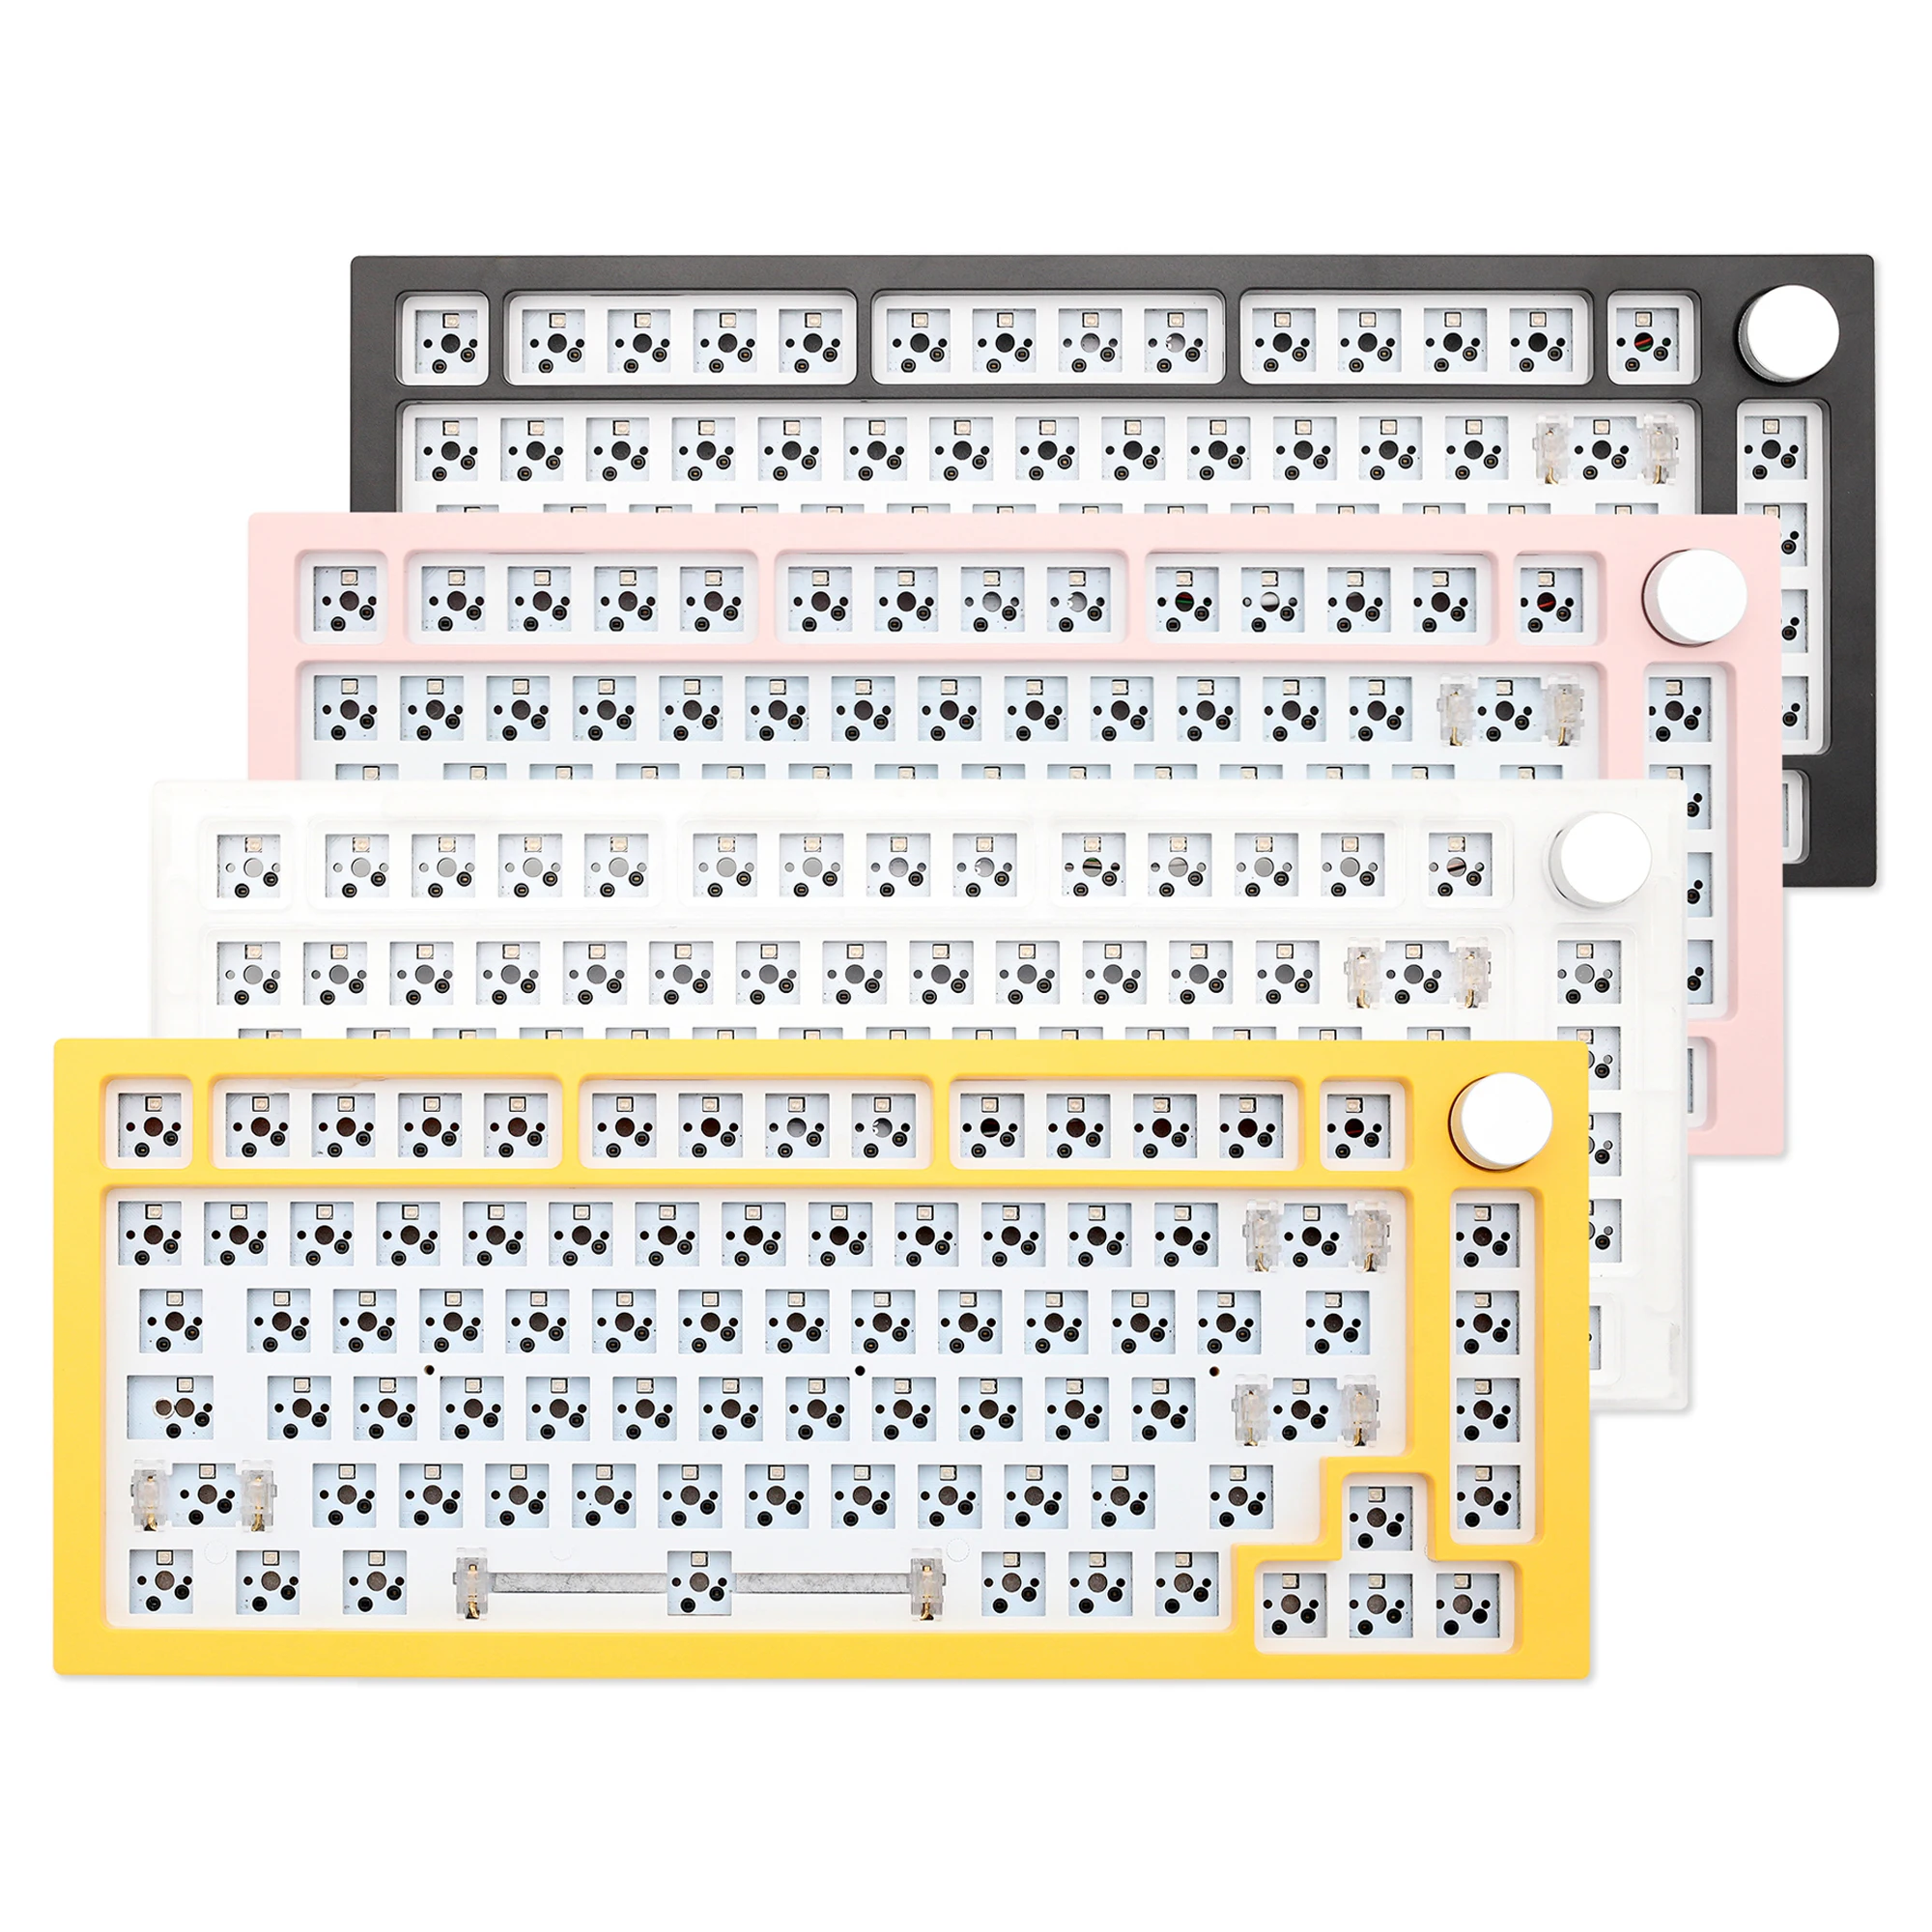 NextTime X75 75% Gasket Mechanical Keyboard kit PCB Hot Swap